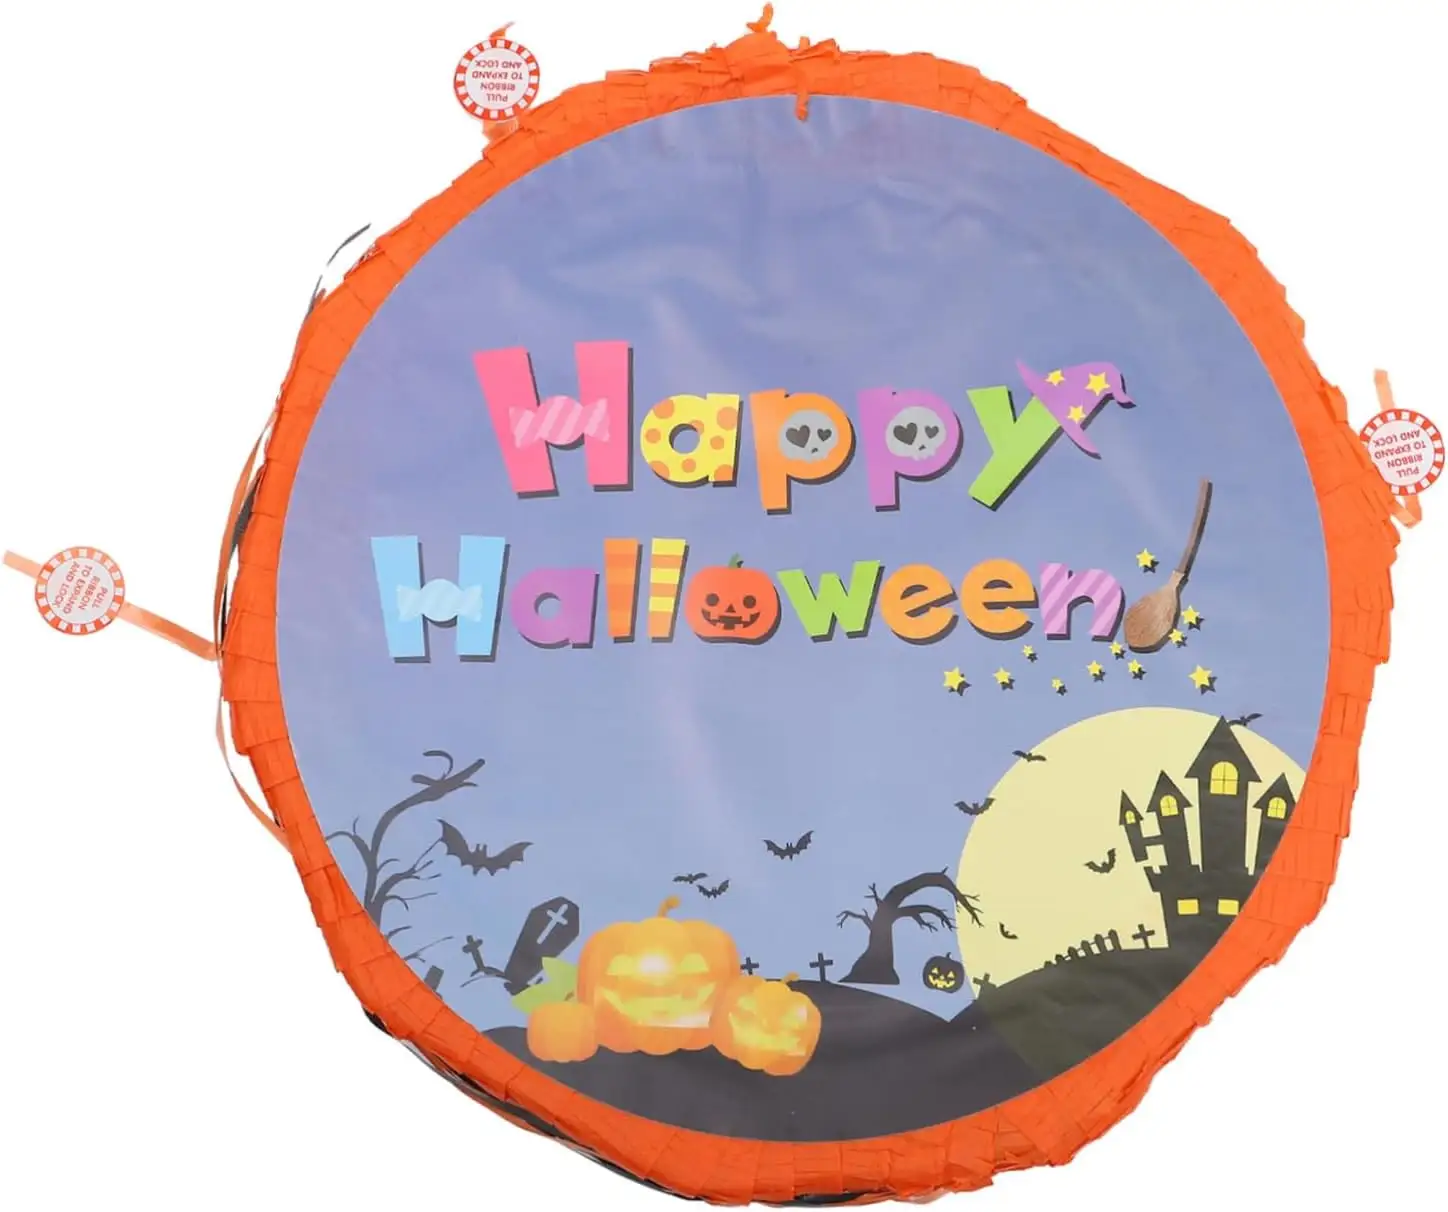 Piñata de Halloween, decoración de otoño, decoración exterior, decoración de Halloween